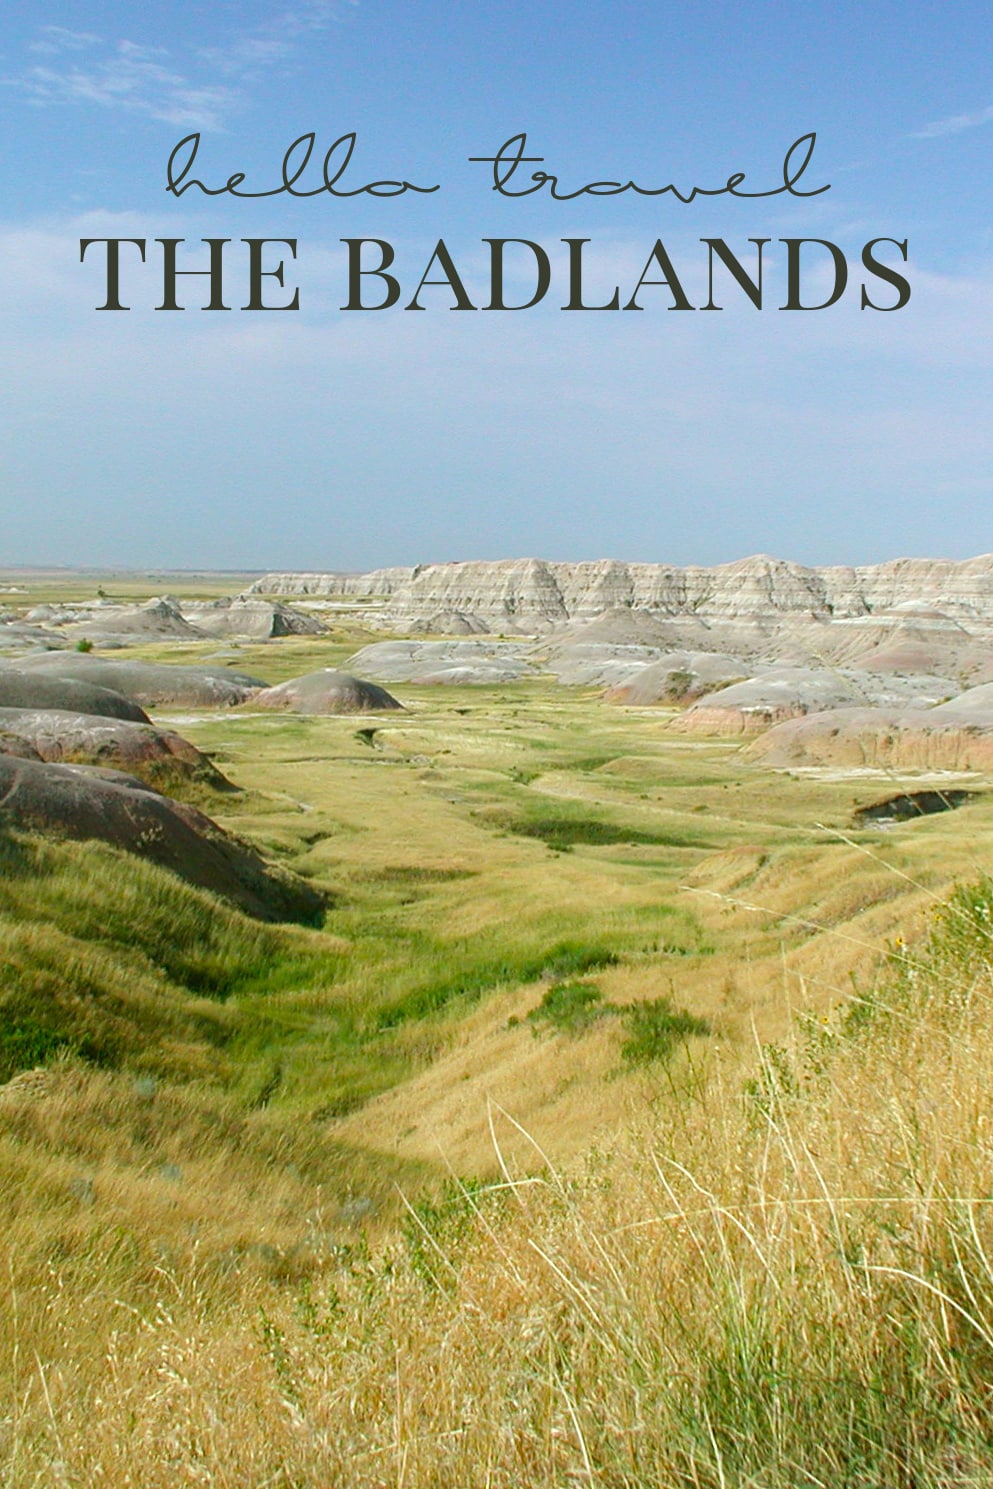 Visiting The Badlands